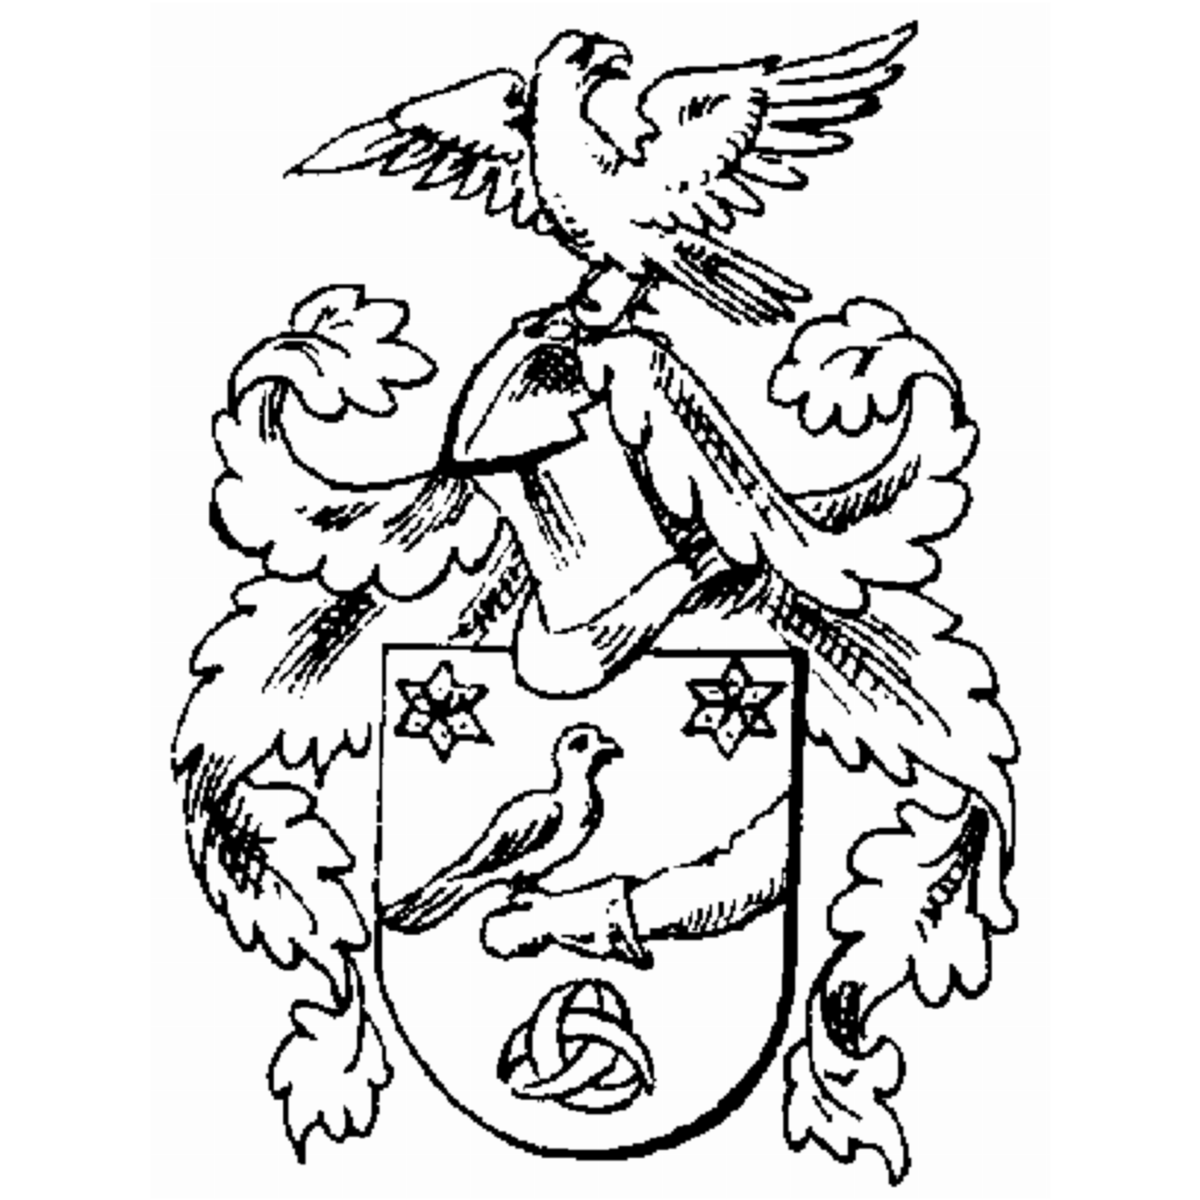 Wappen der Familie Sateler